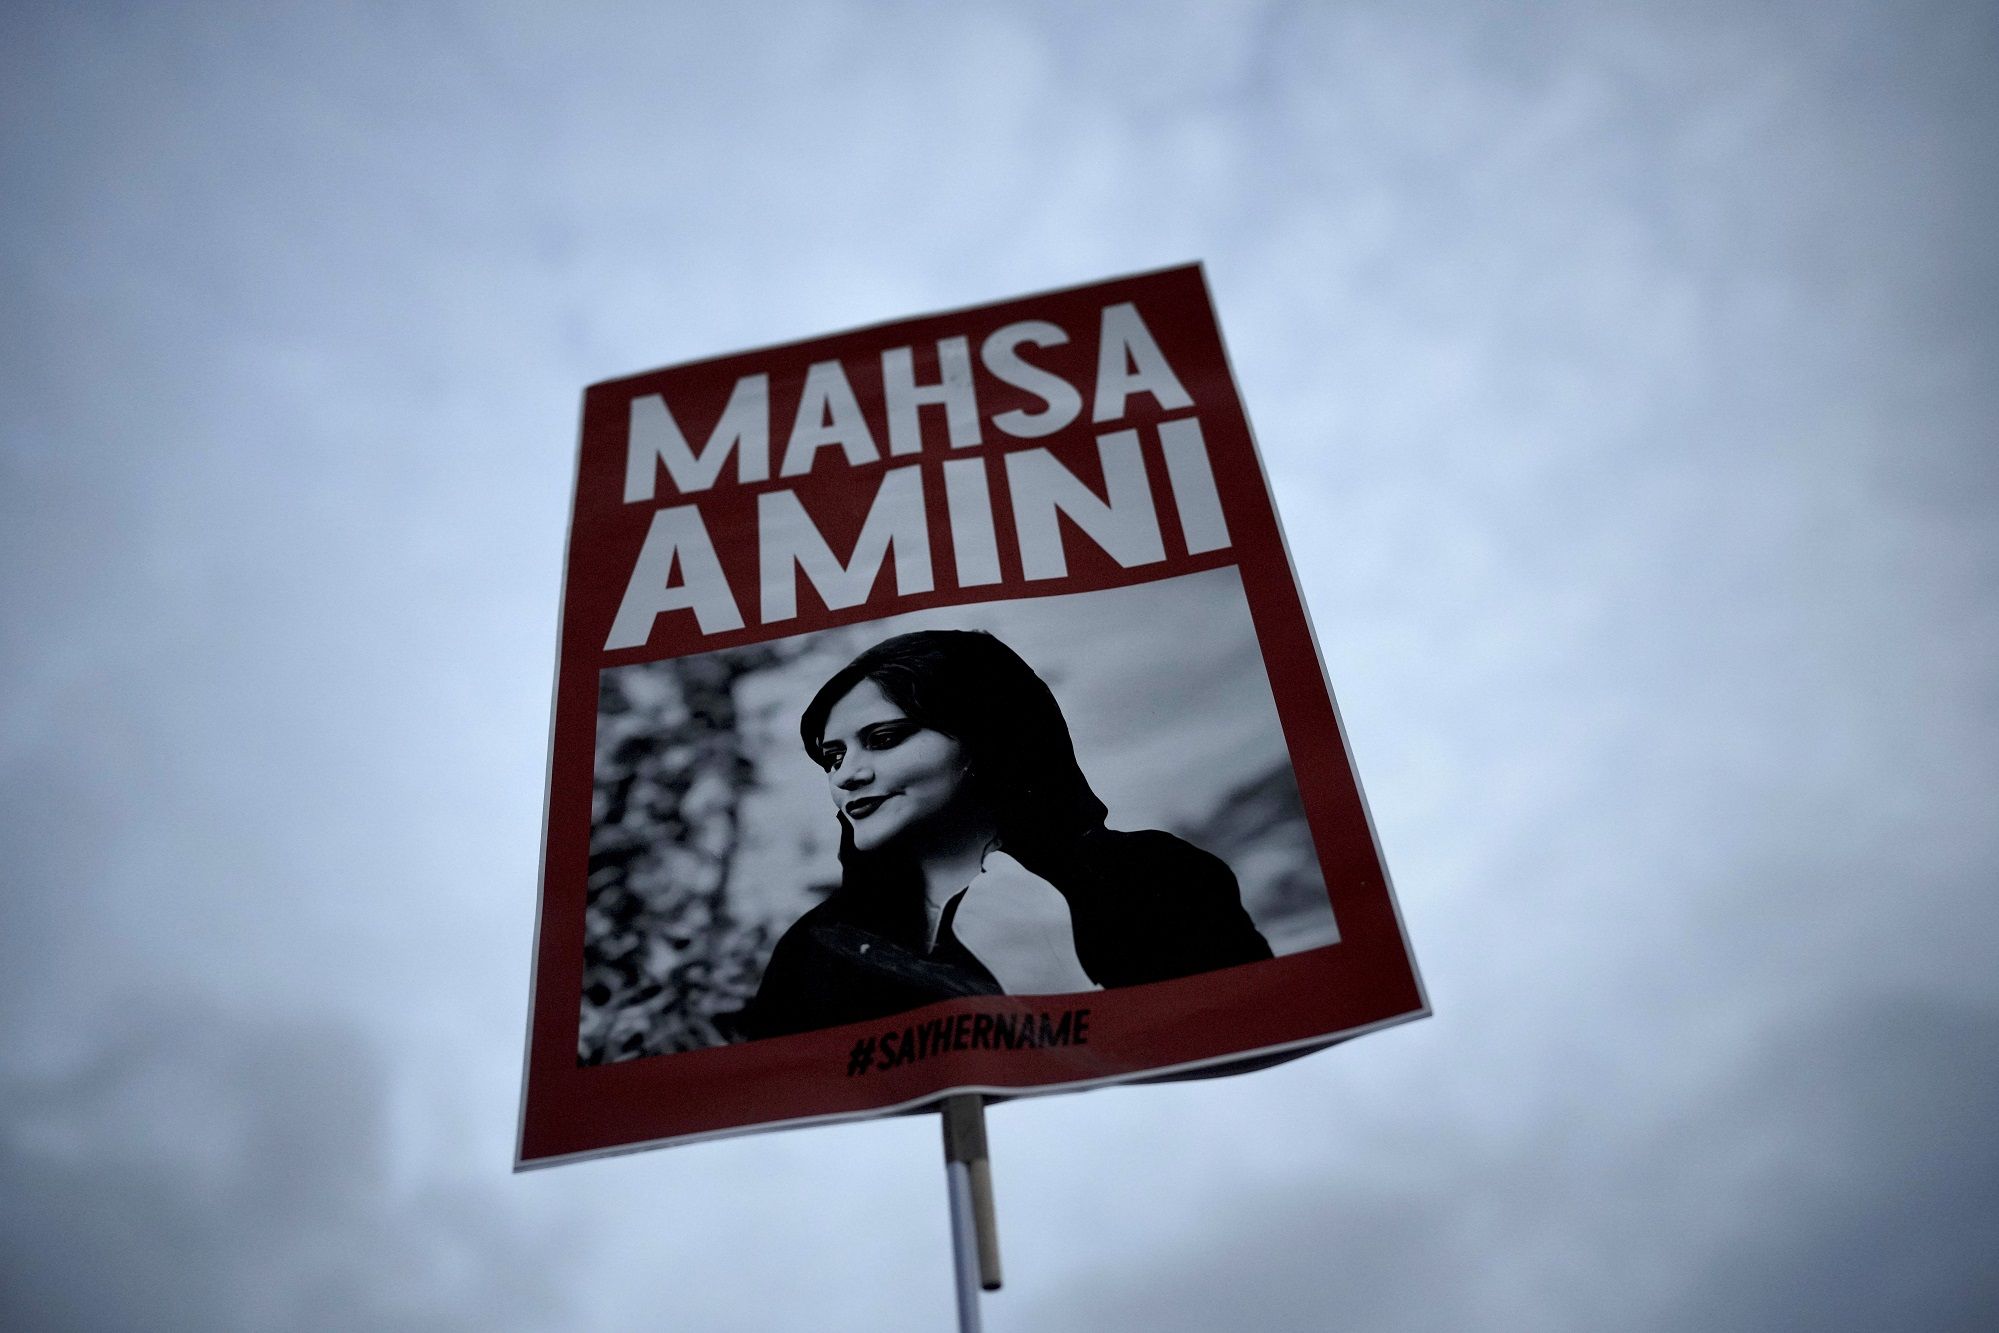 UPDATE Demo Kematian Mahsa Amini: 5 Fakta Terbaru dari Kedubes Iran di Indonesia